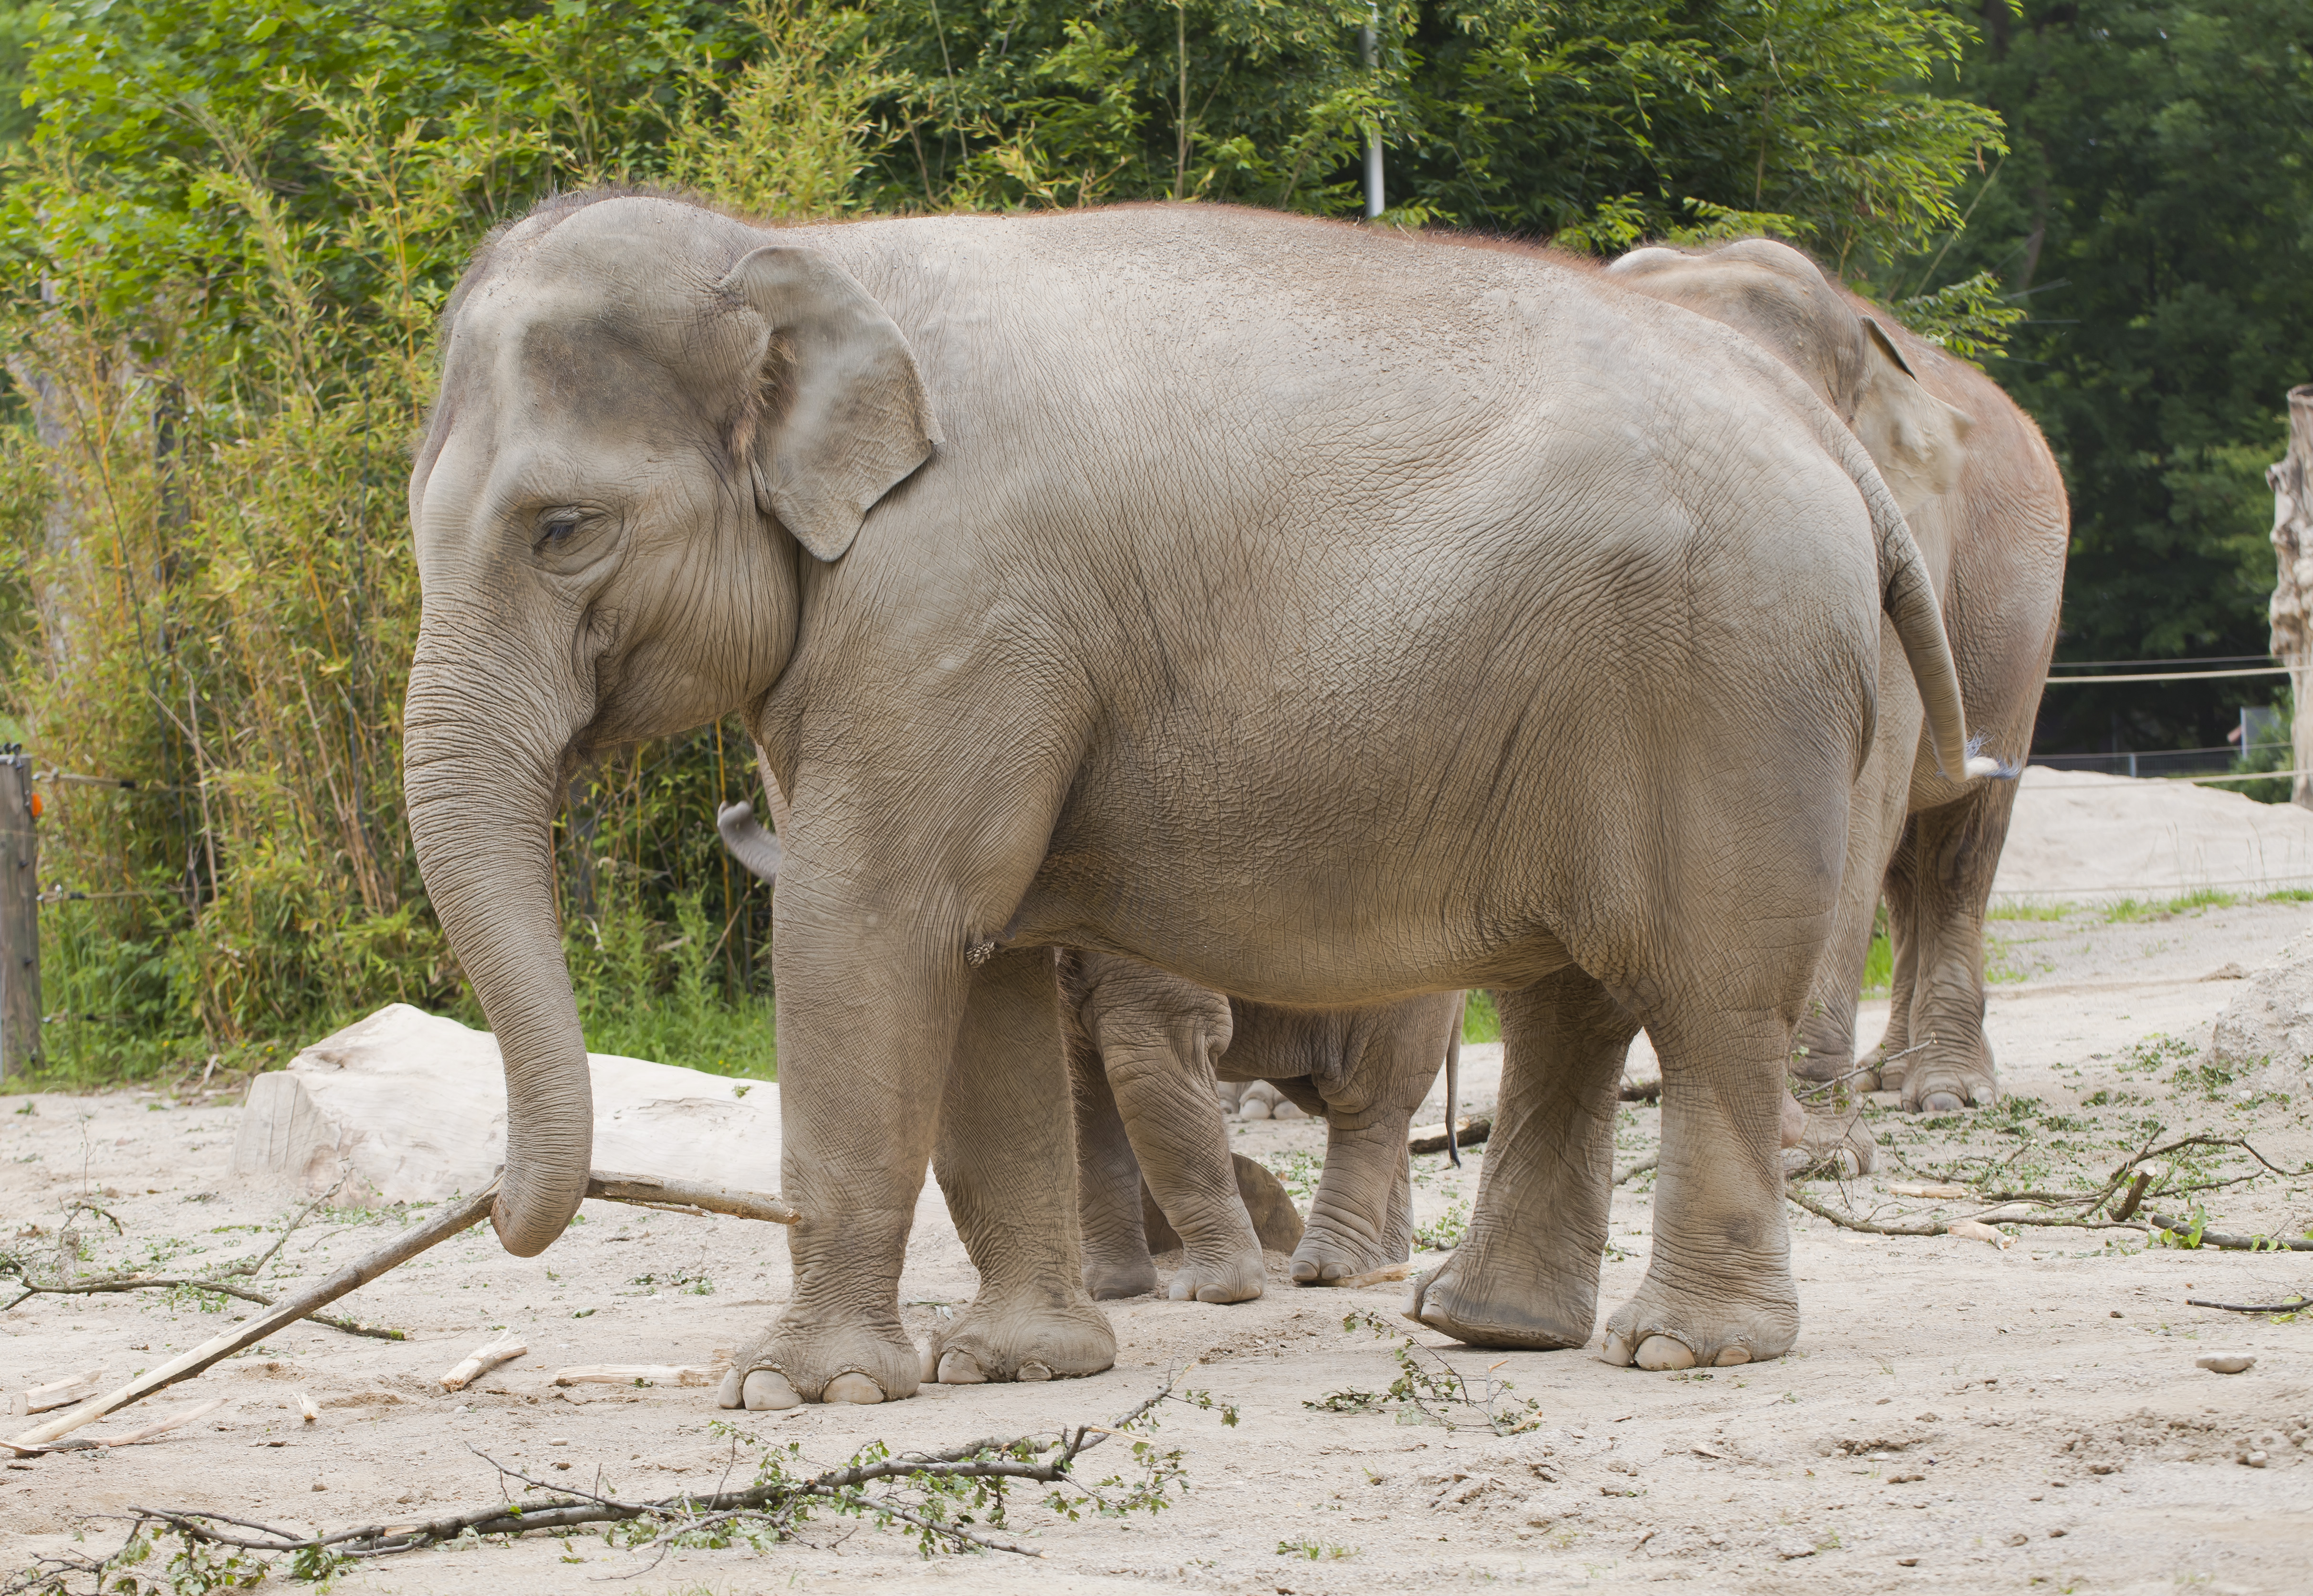 Elefante asiático (Elephas maximus), Tierpark Hellabrunn, Múnich, Alemania, 2012-06-17, DD 06